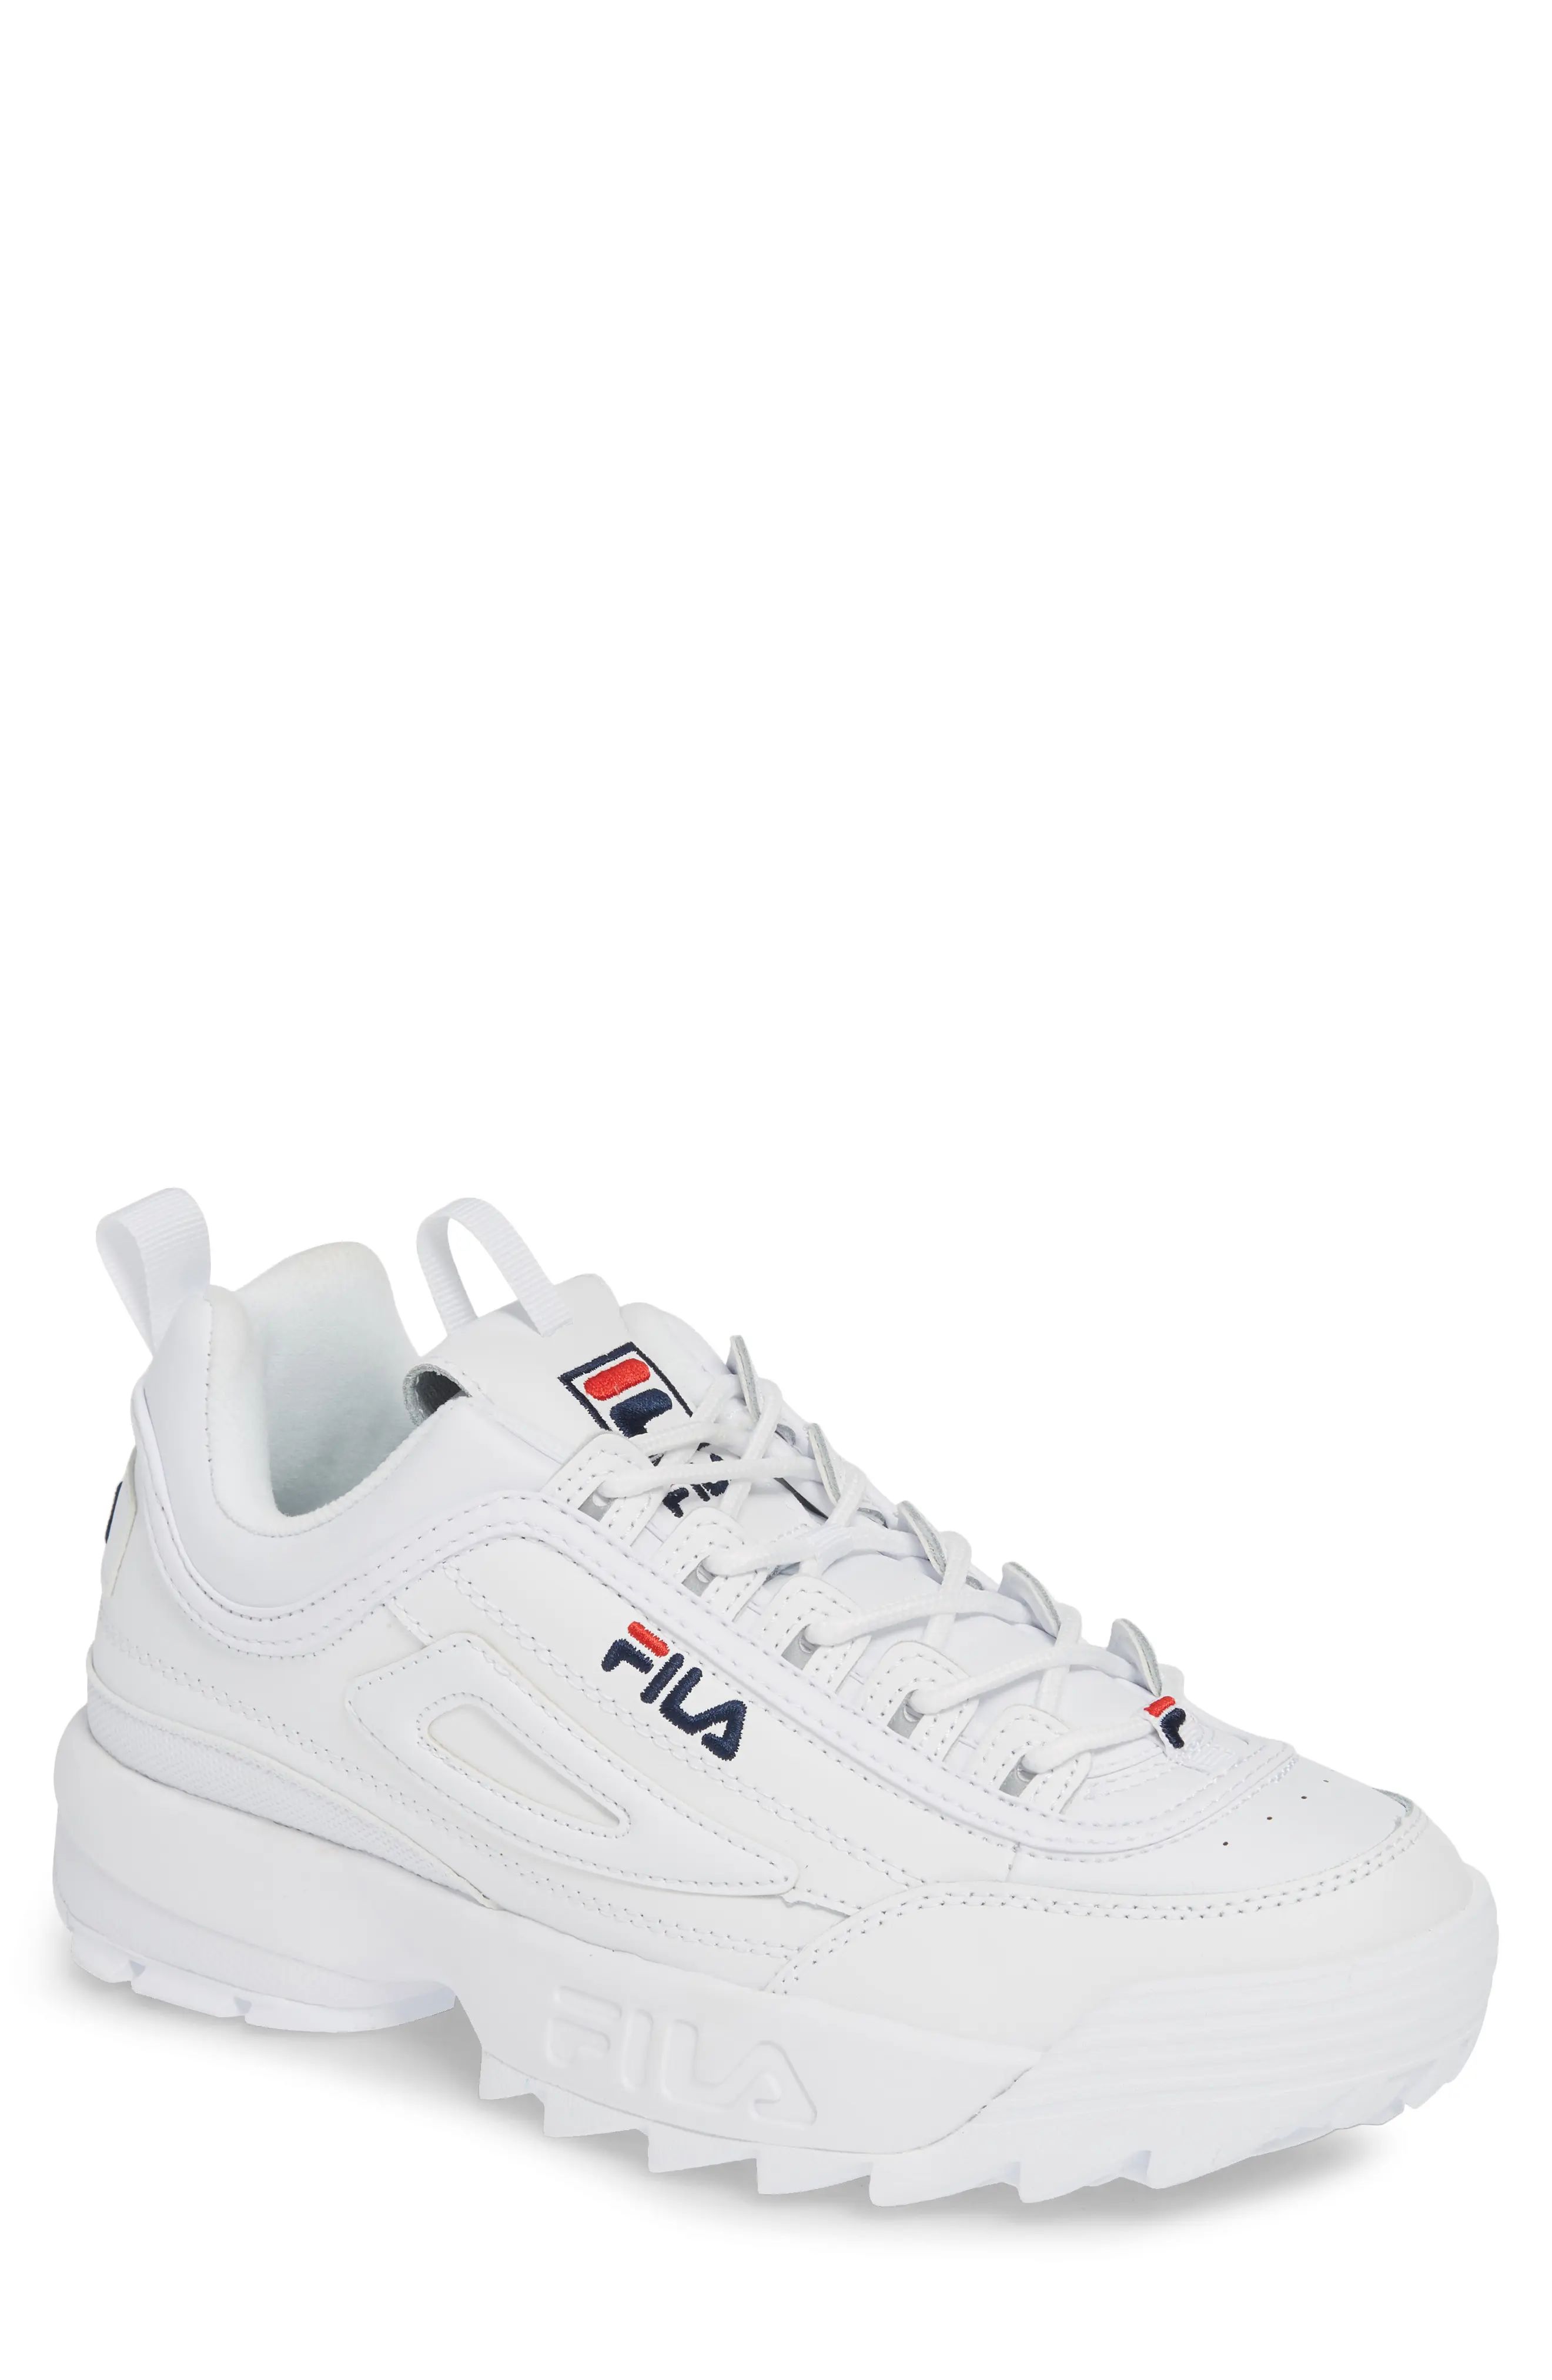 FILA Disruptor II Premium Sneaker (Men) | Nordstrom